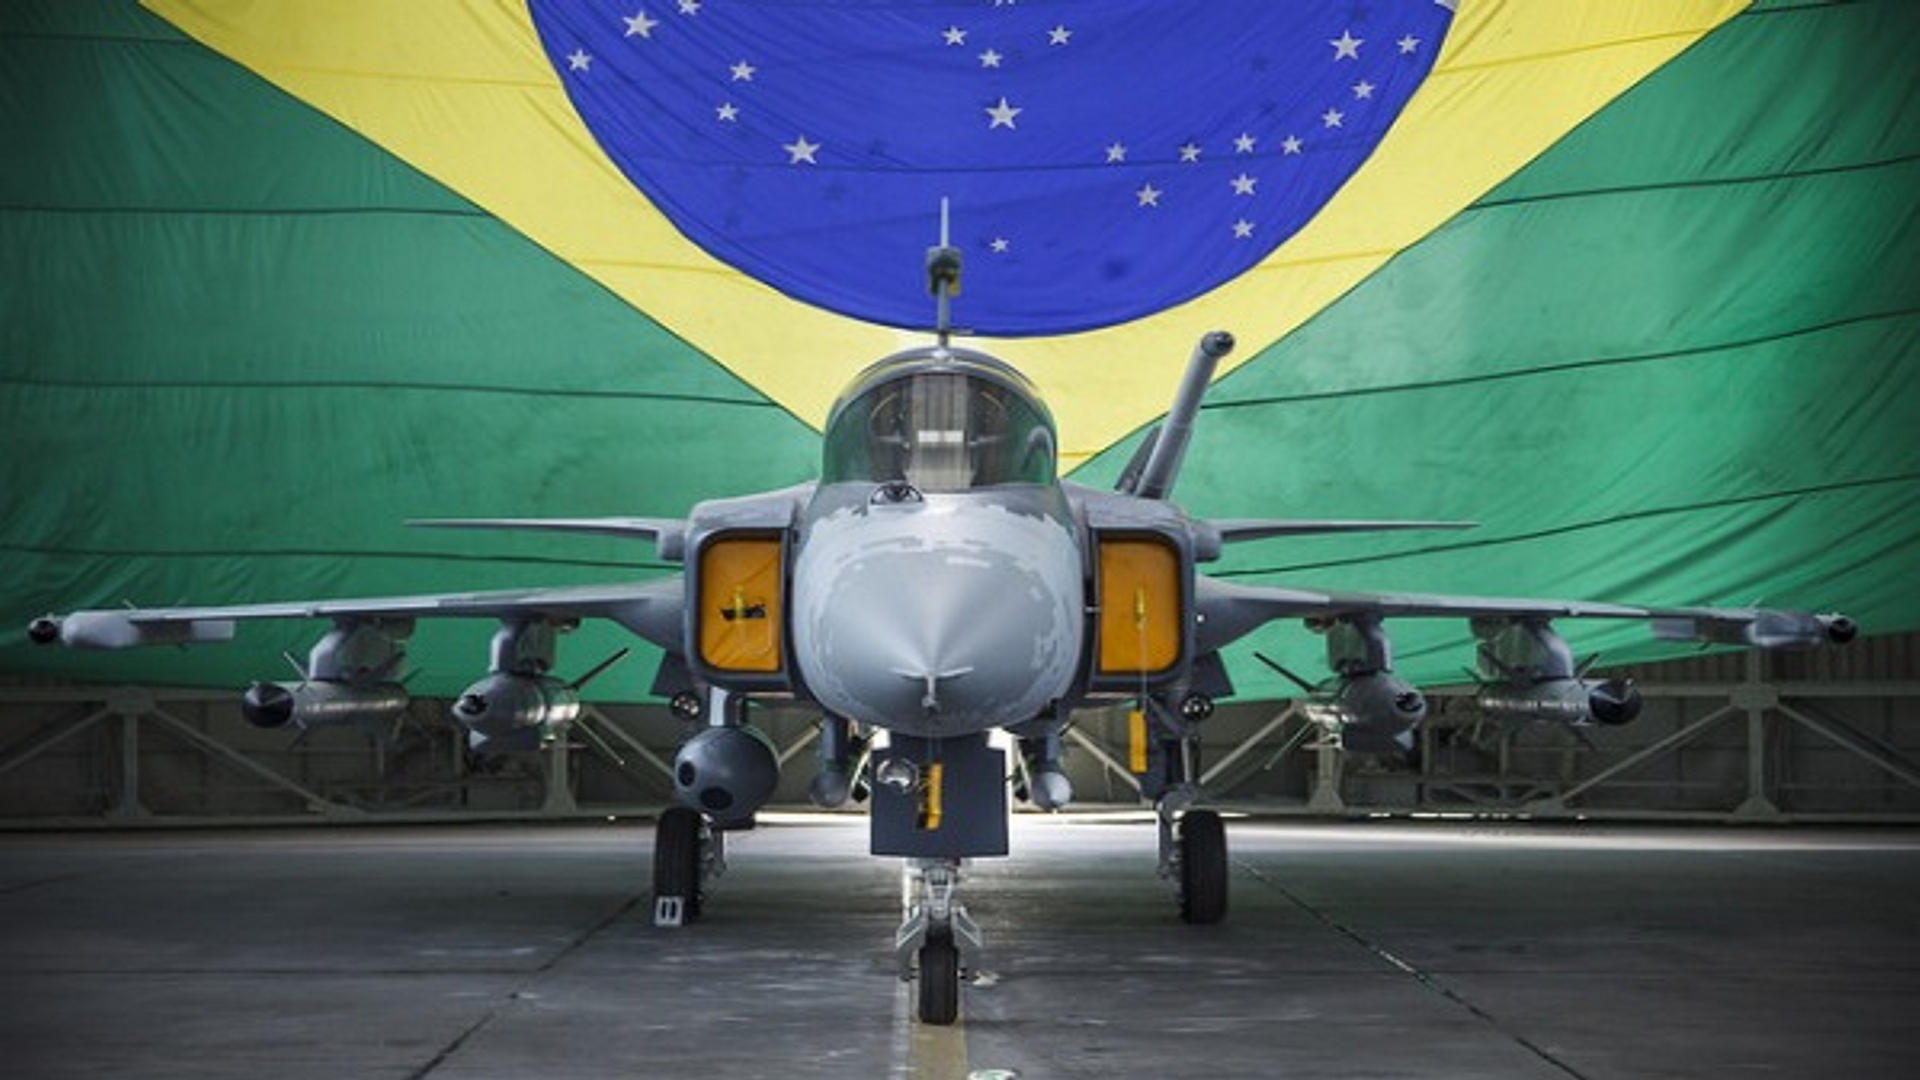 Exército Brasileiro abre concurso com 127 vagas